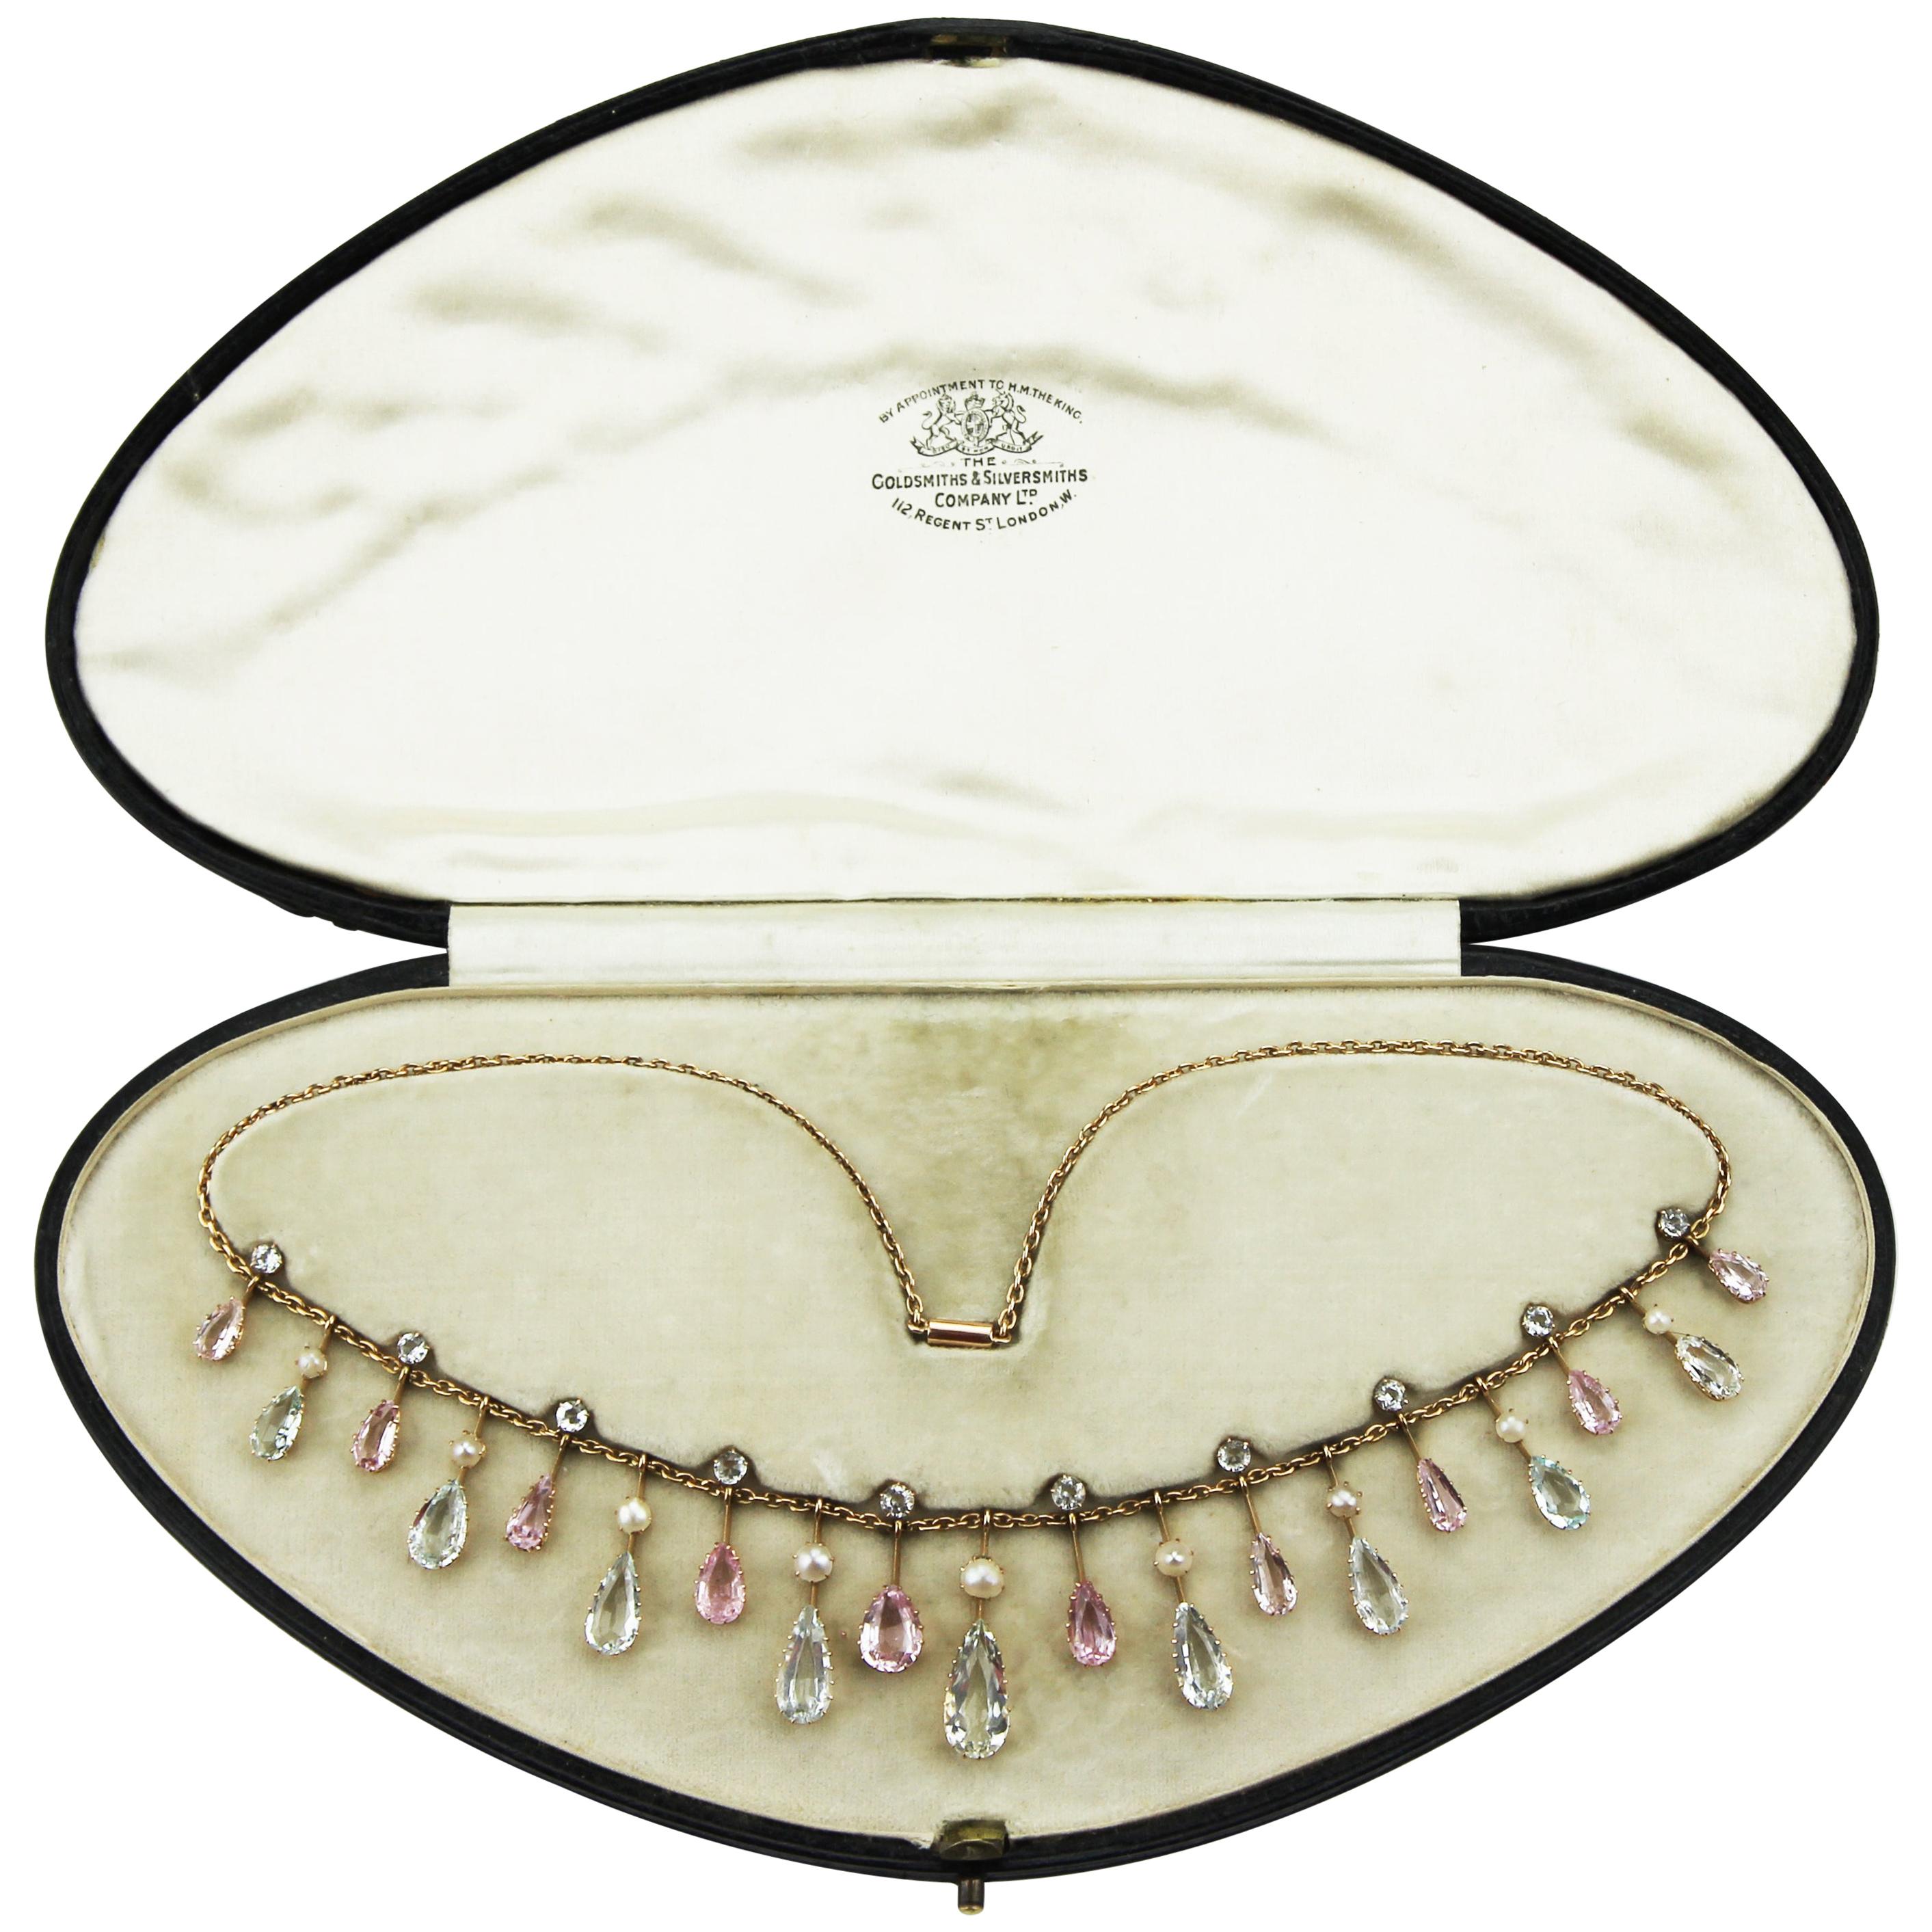 Antique Edwardian Natural Pearls, Aquamarine, Topaz Fringe Necklace or Headpiece